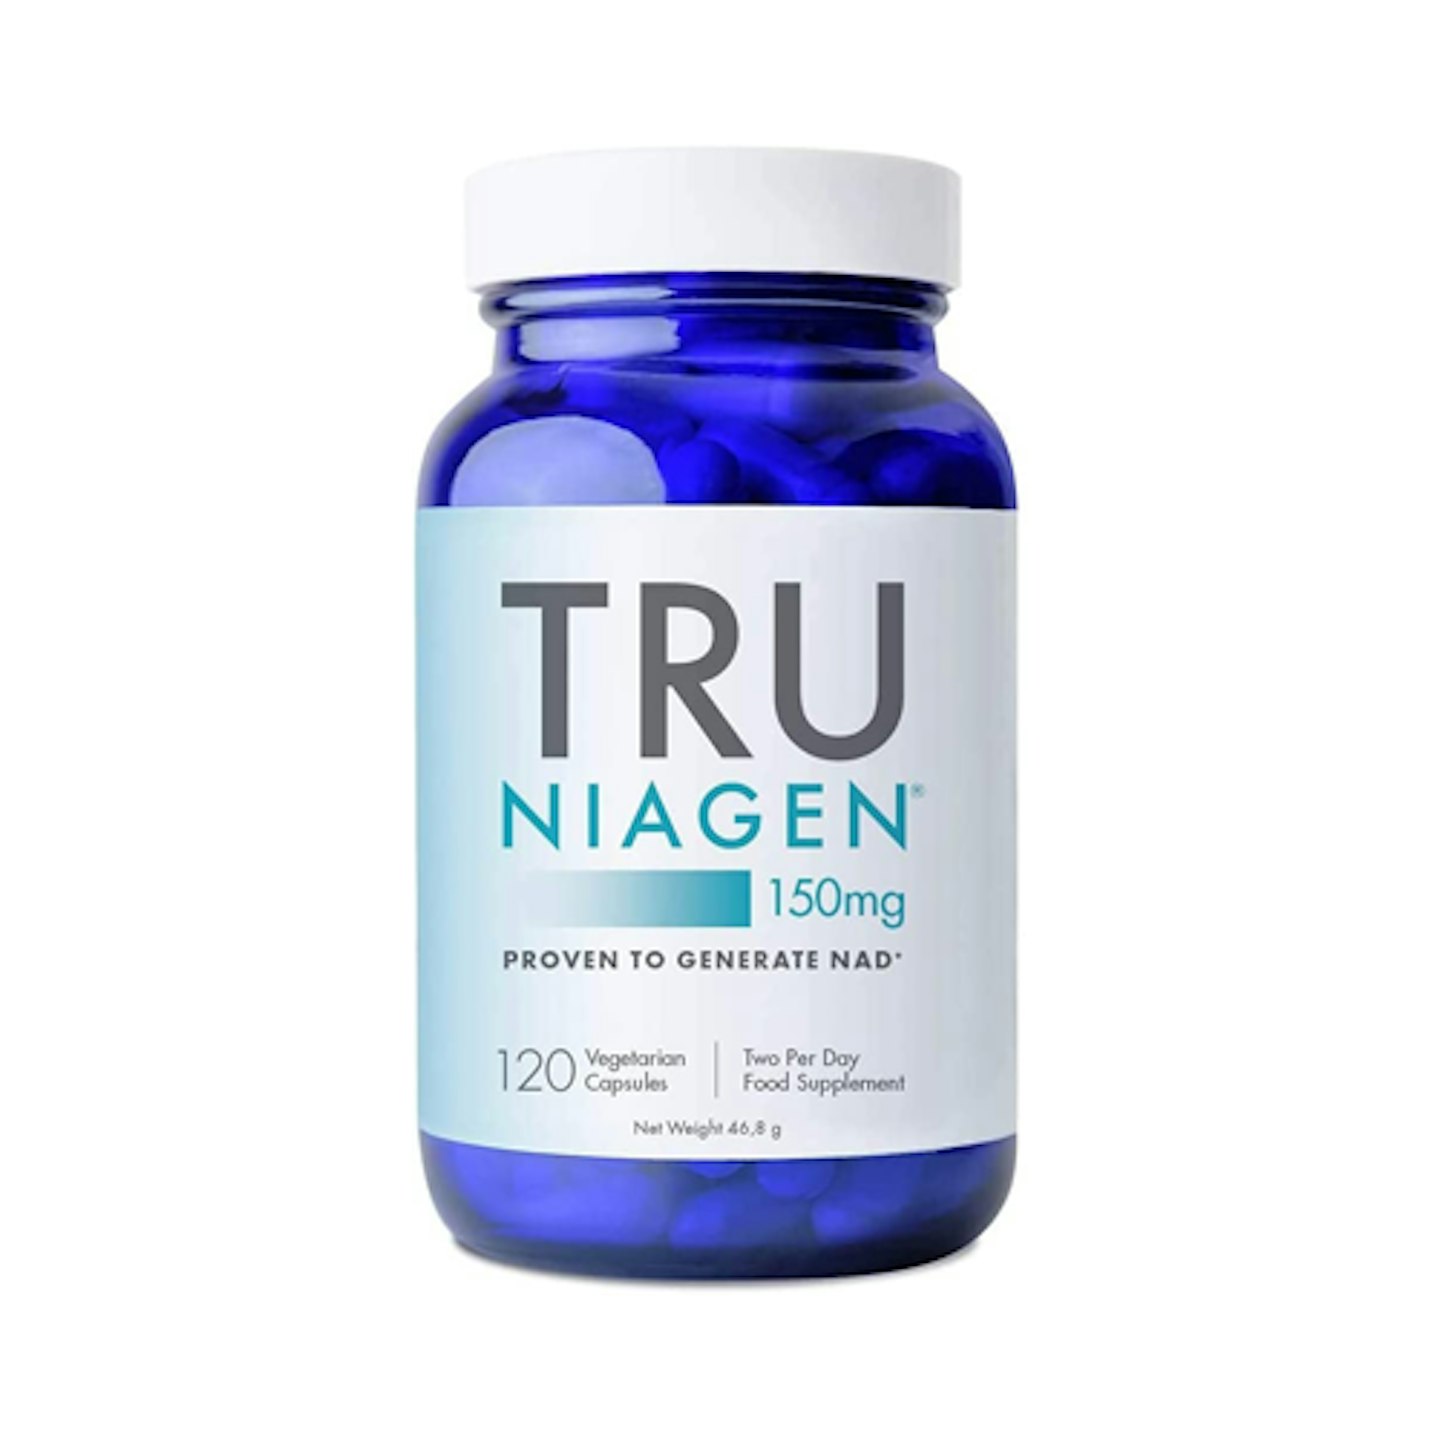 TRU NIAGEN NAD+ Supplement